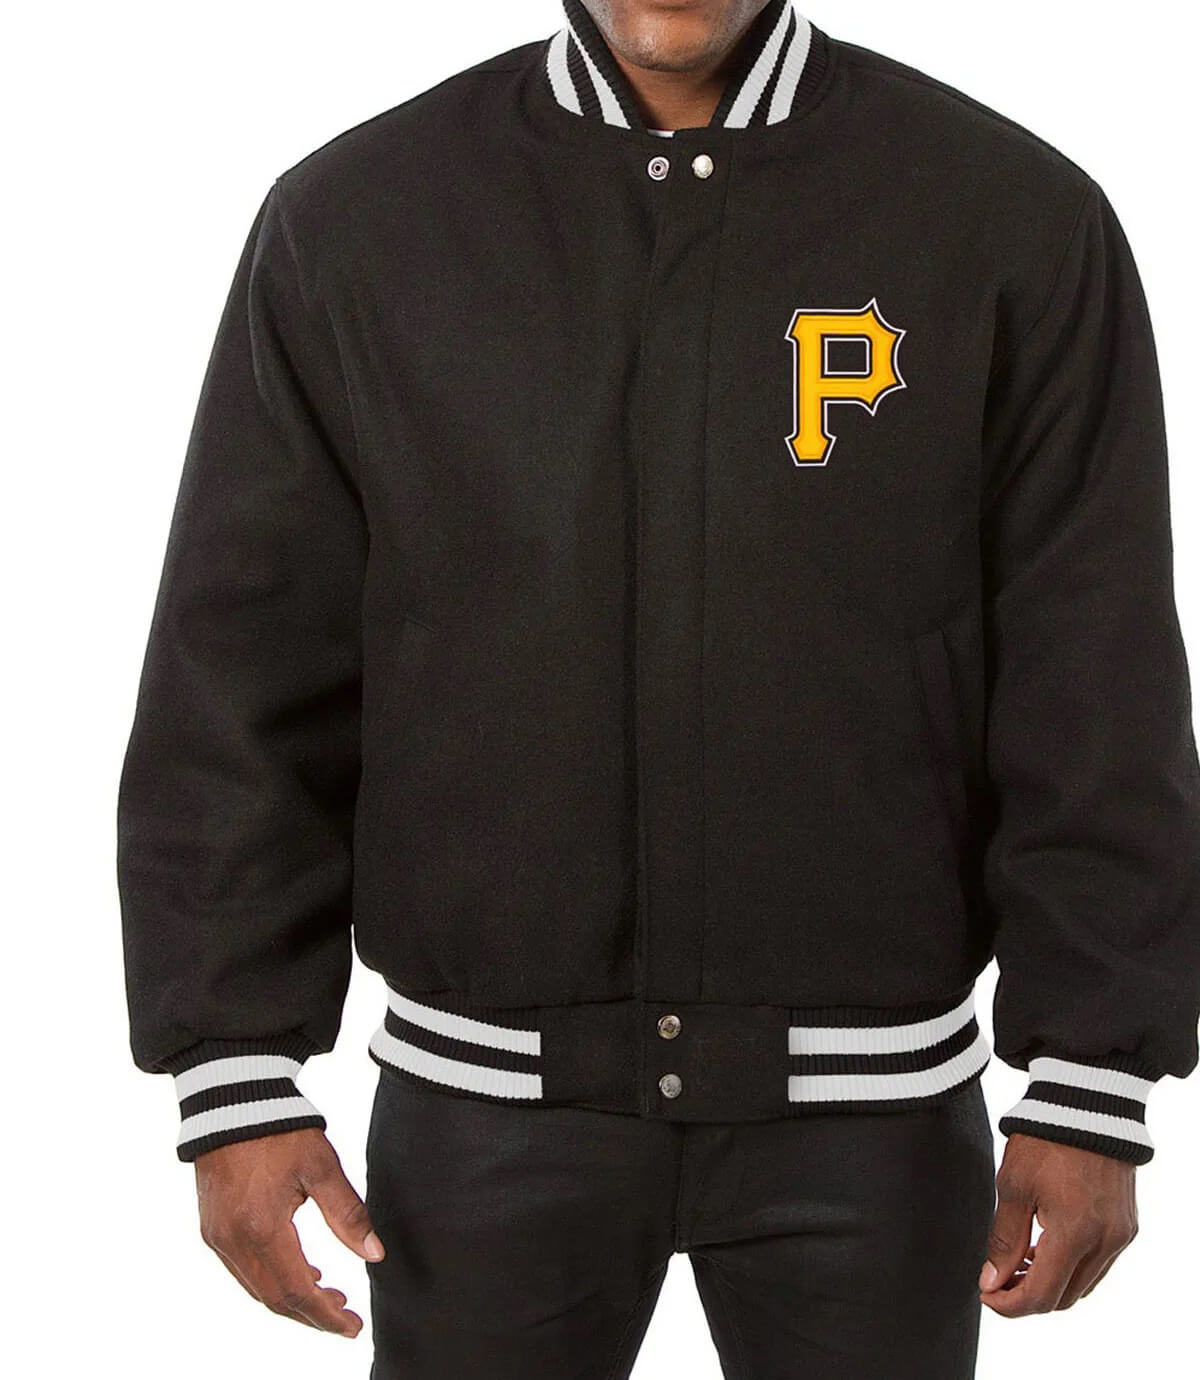 Maker of Jacket Fashion Jackets Pittsburgh Pirates MLB Black Varsity